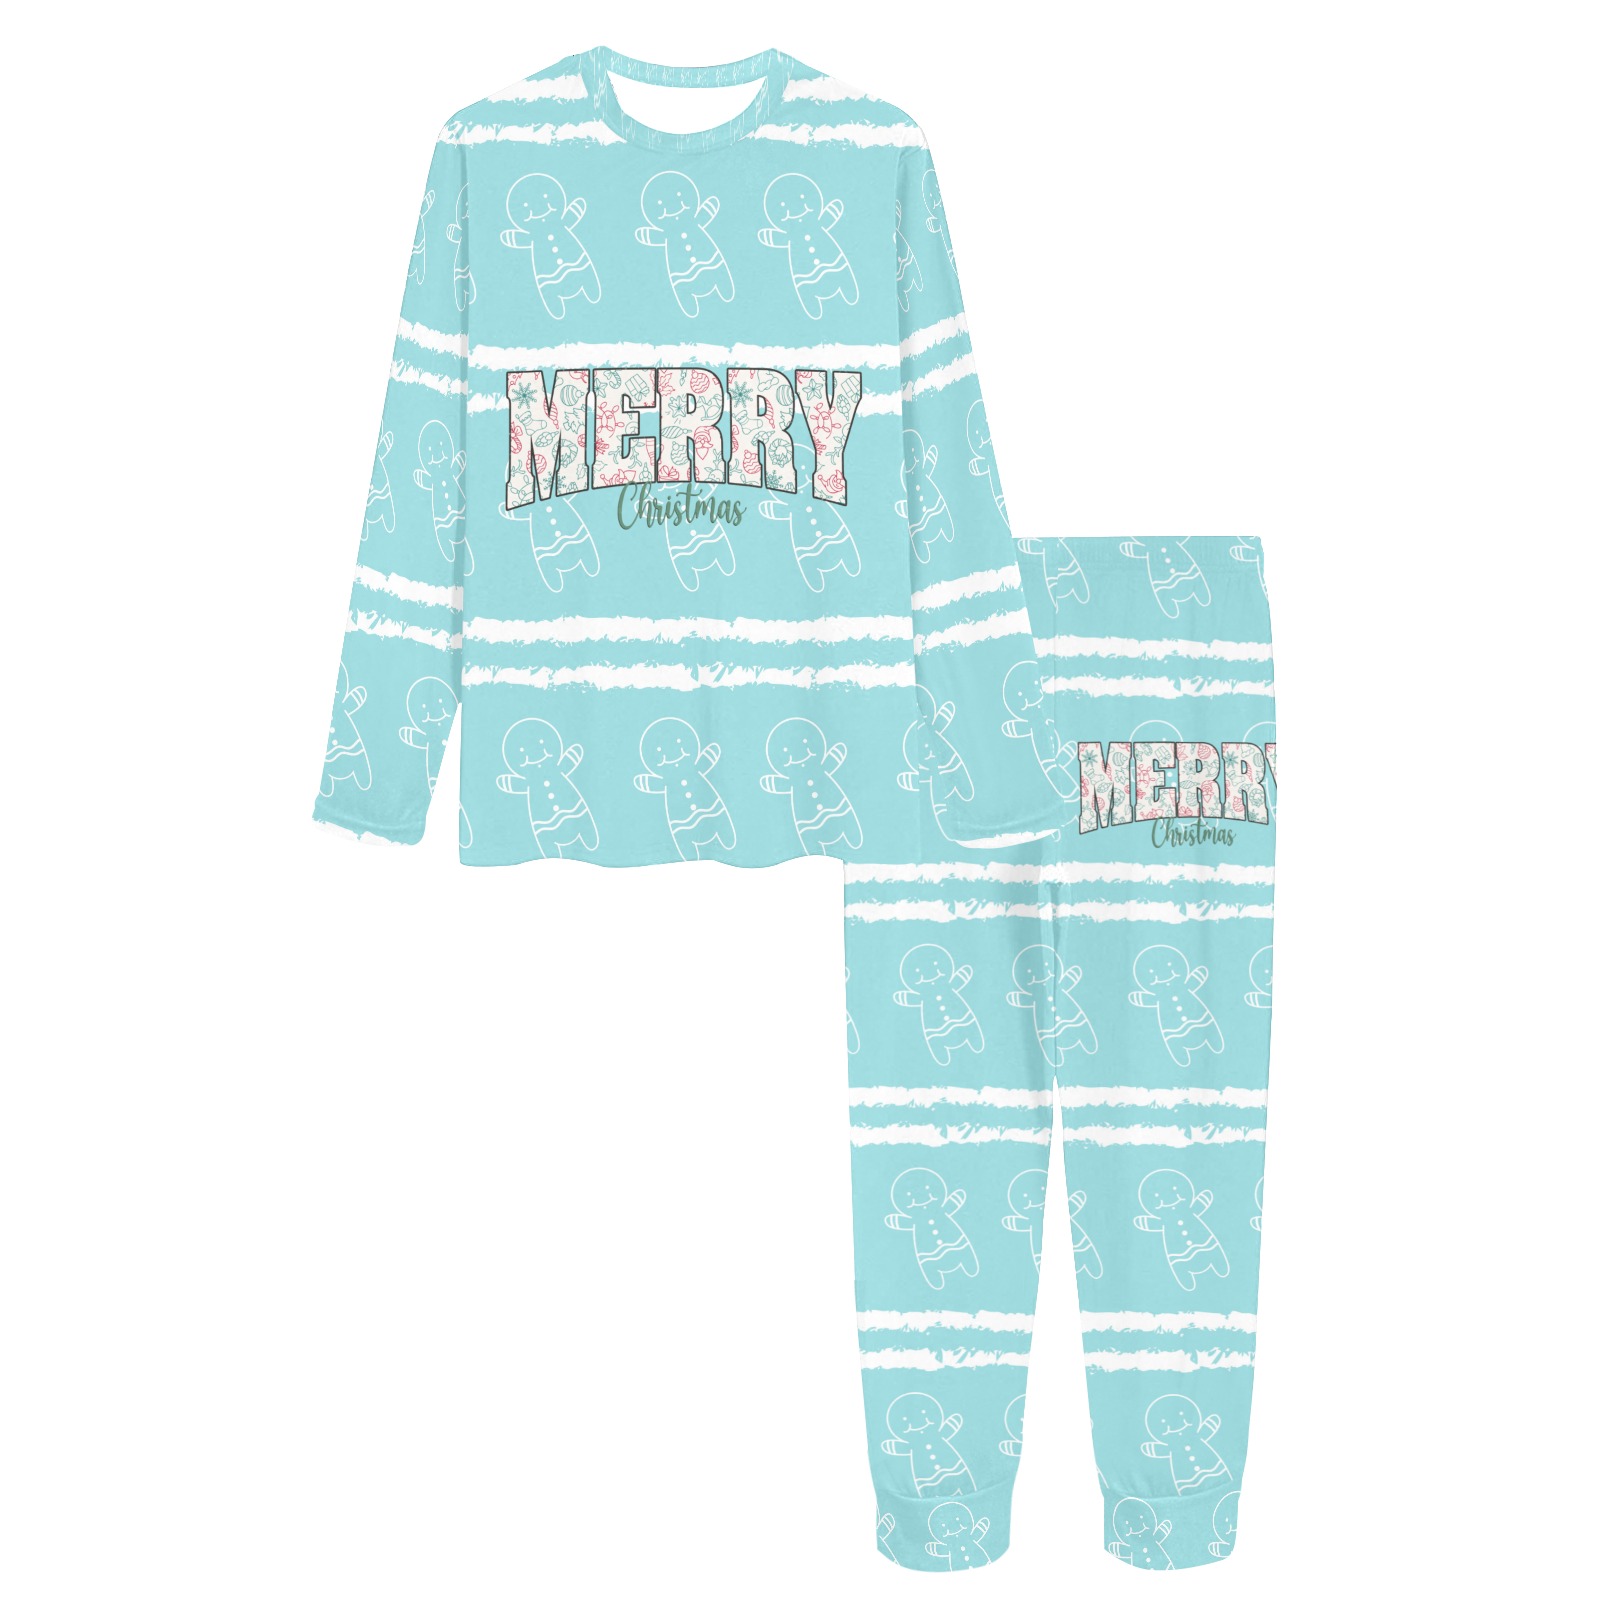 Merry Christmas Light Blue Gingerbread Man Women's All Over Print Pajama Set